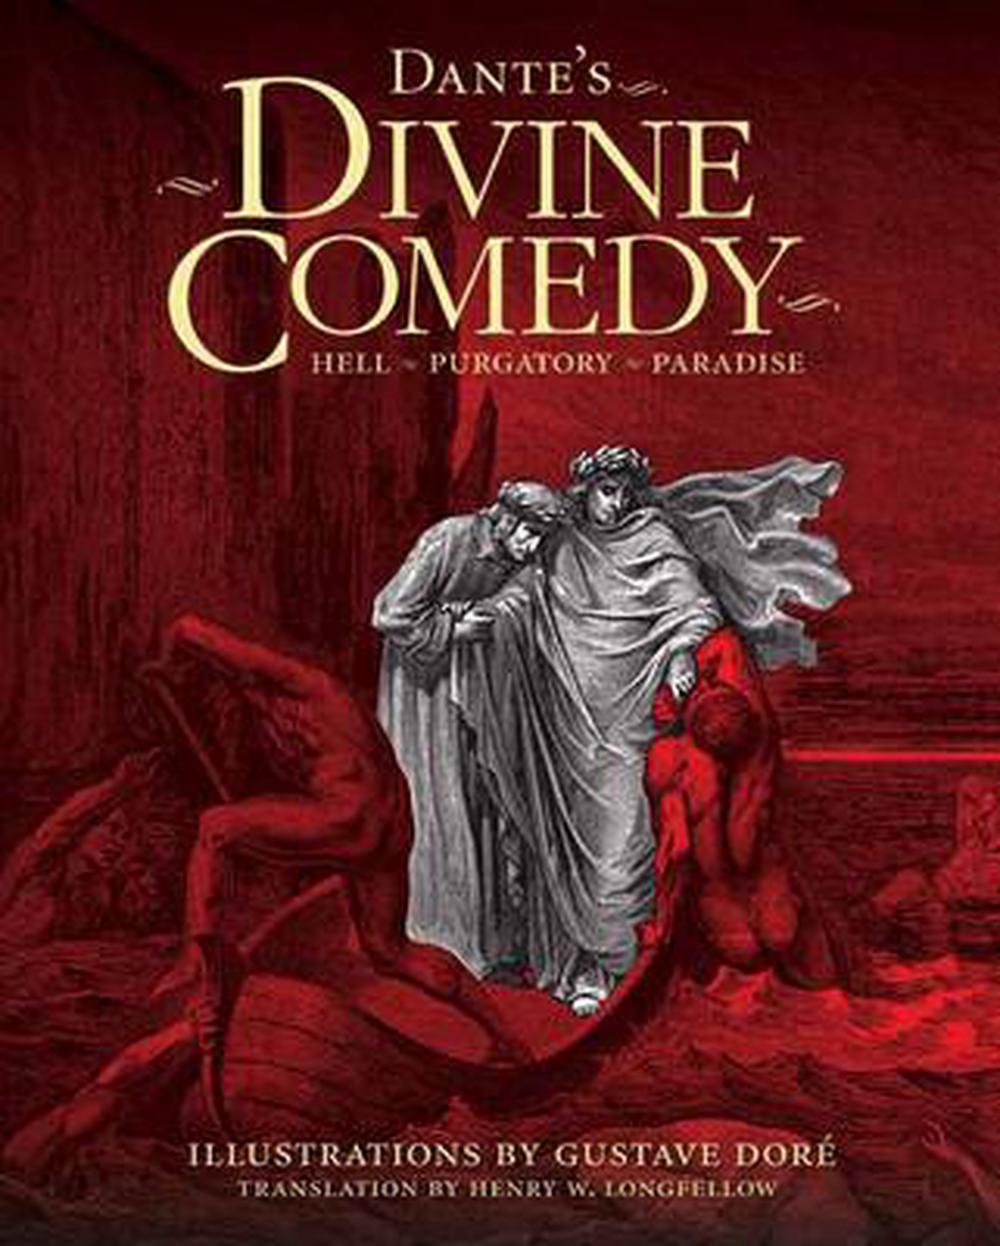 the divine comedy with dante